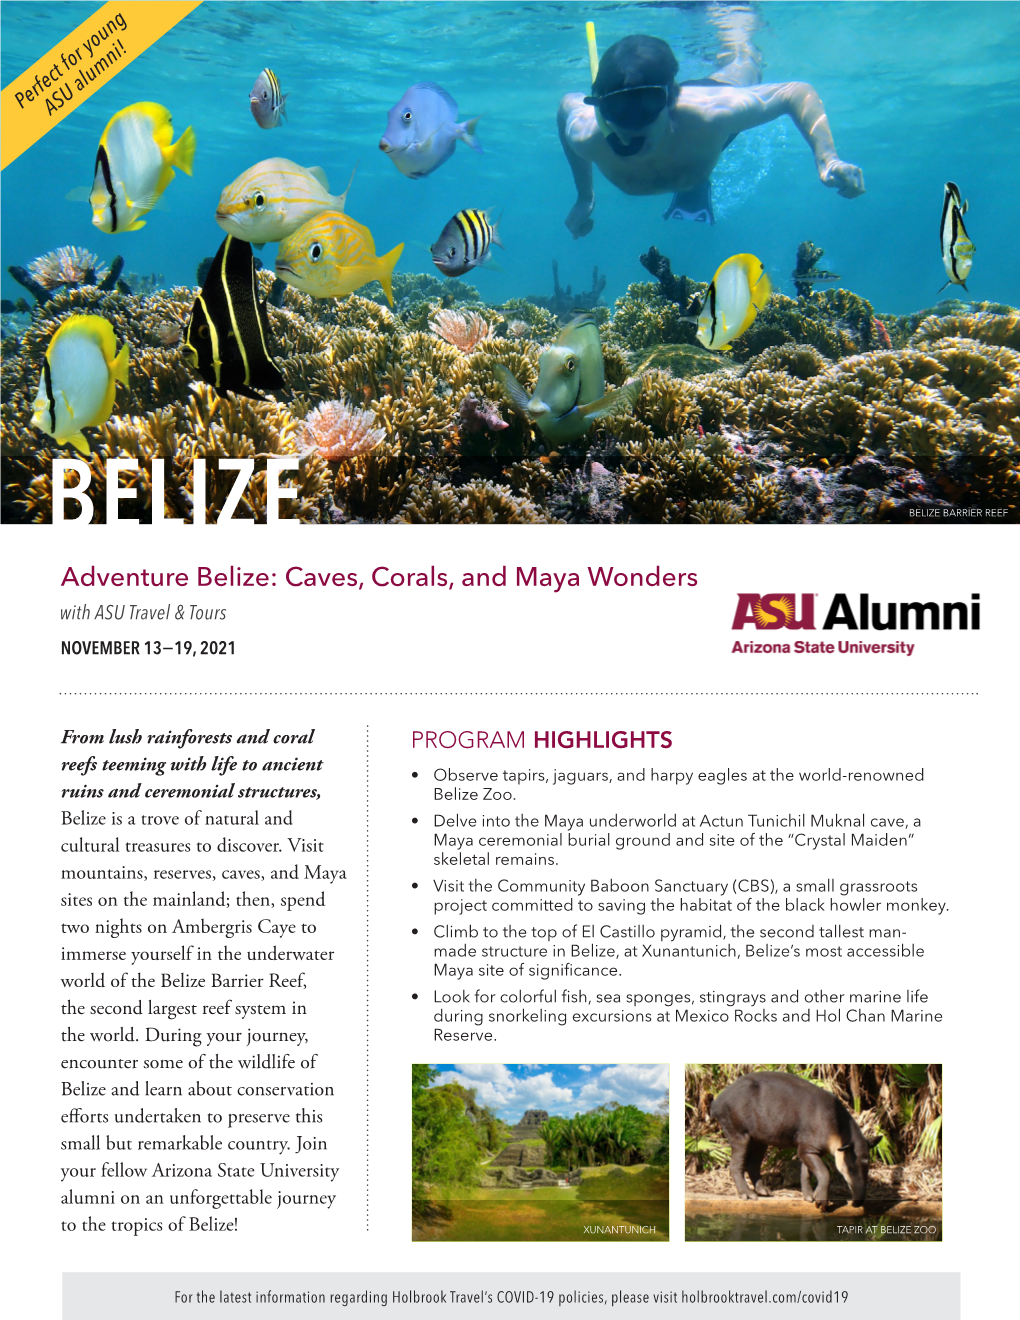 BELIZE BELIZE BARRIER REEF Adventure Belize: Caves, Corals, and Maya Wonders with ASU Travel & Tours NOVEMBER 13−19, 2021